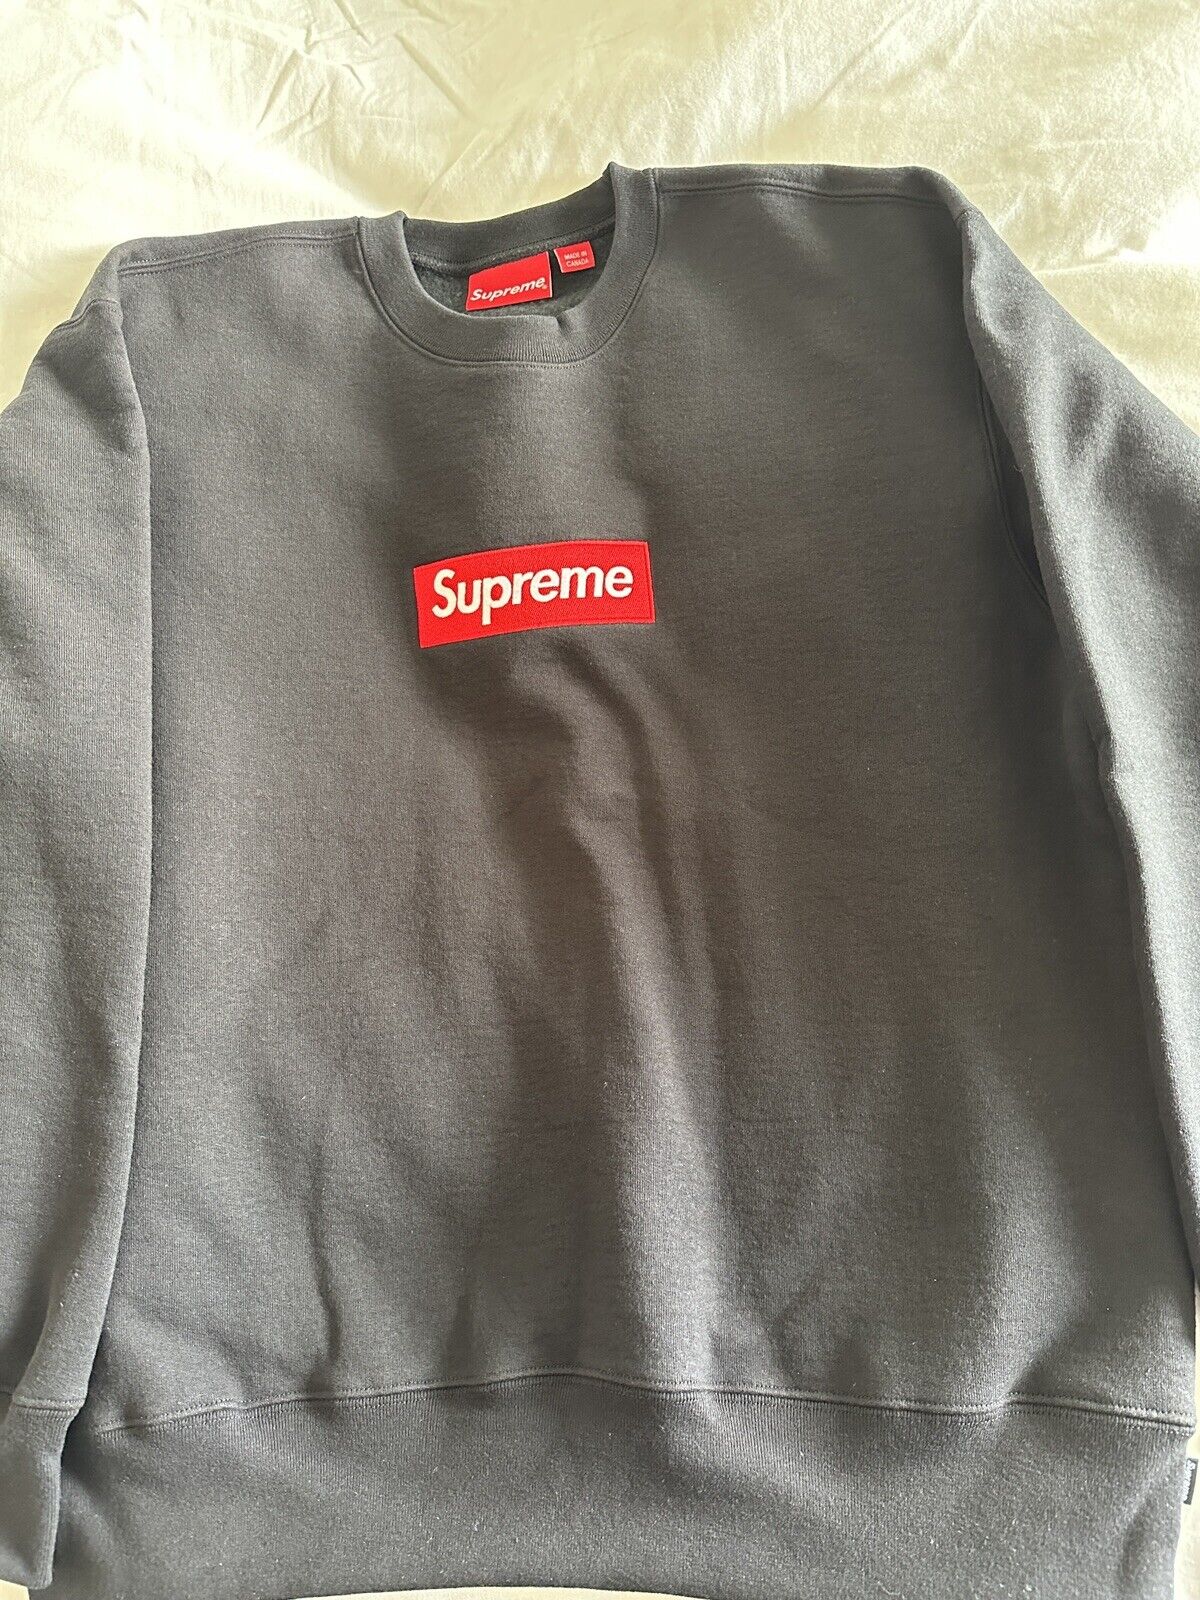 New Supreme Box Logo Crewneck Sweatshirt Black Size Medium Bogo